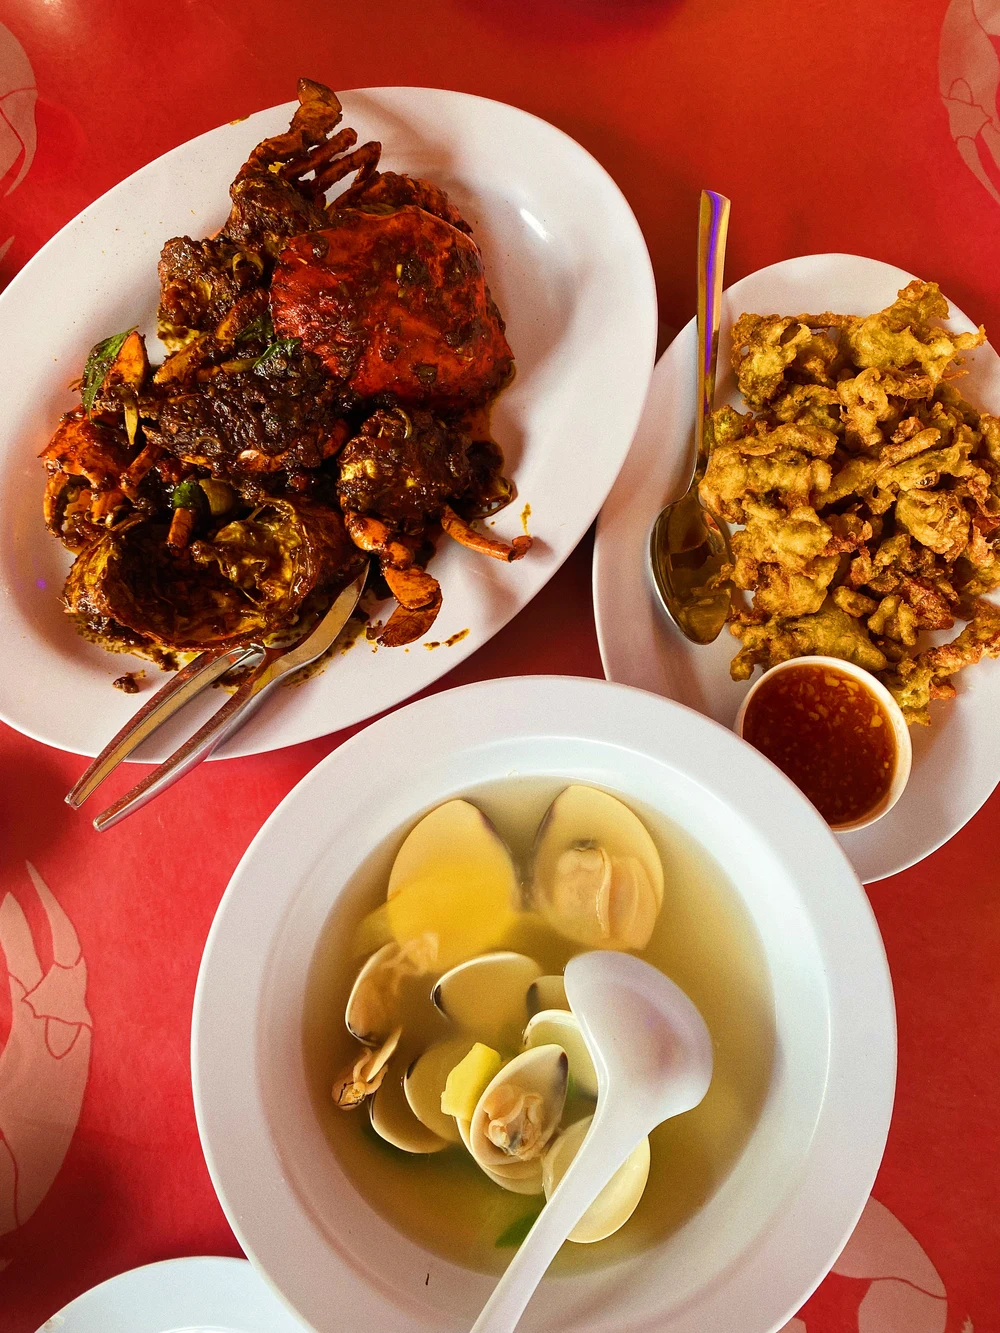 best food restaurant in kk kota kinabalu sabah seafood